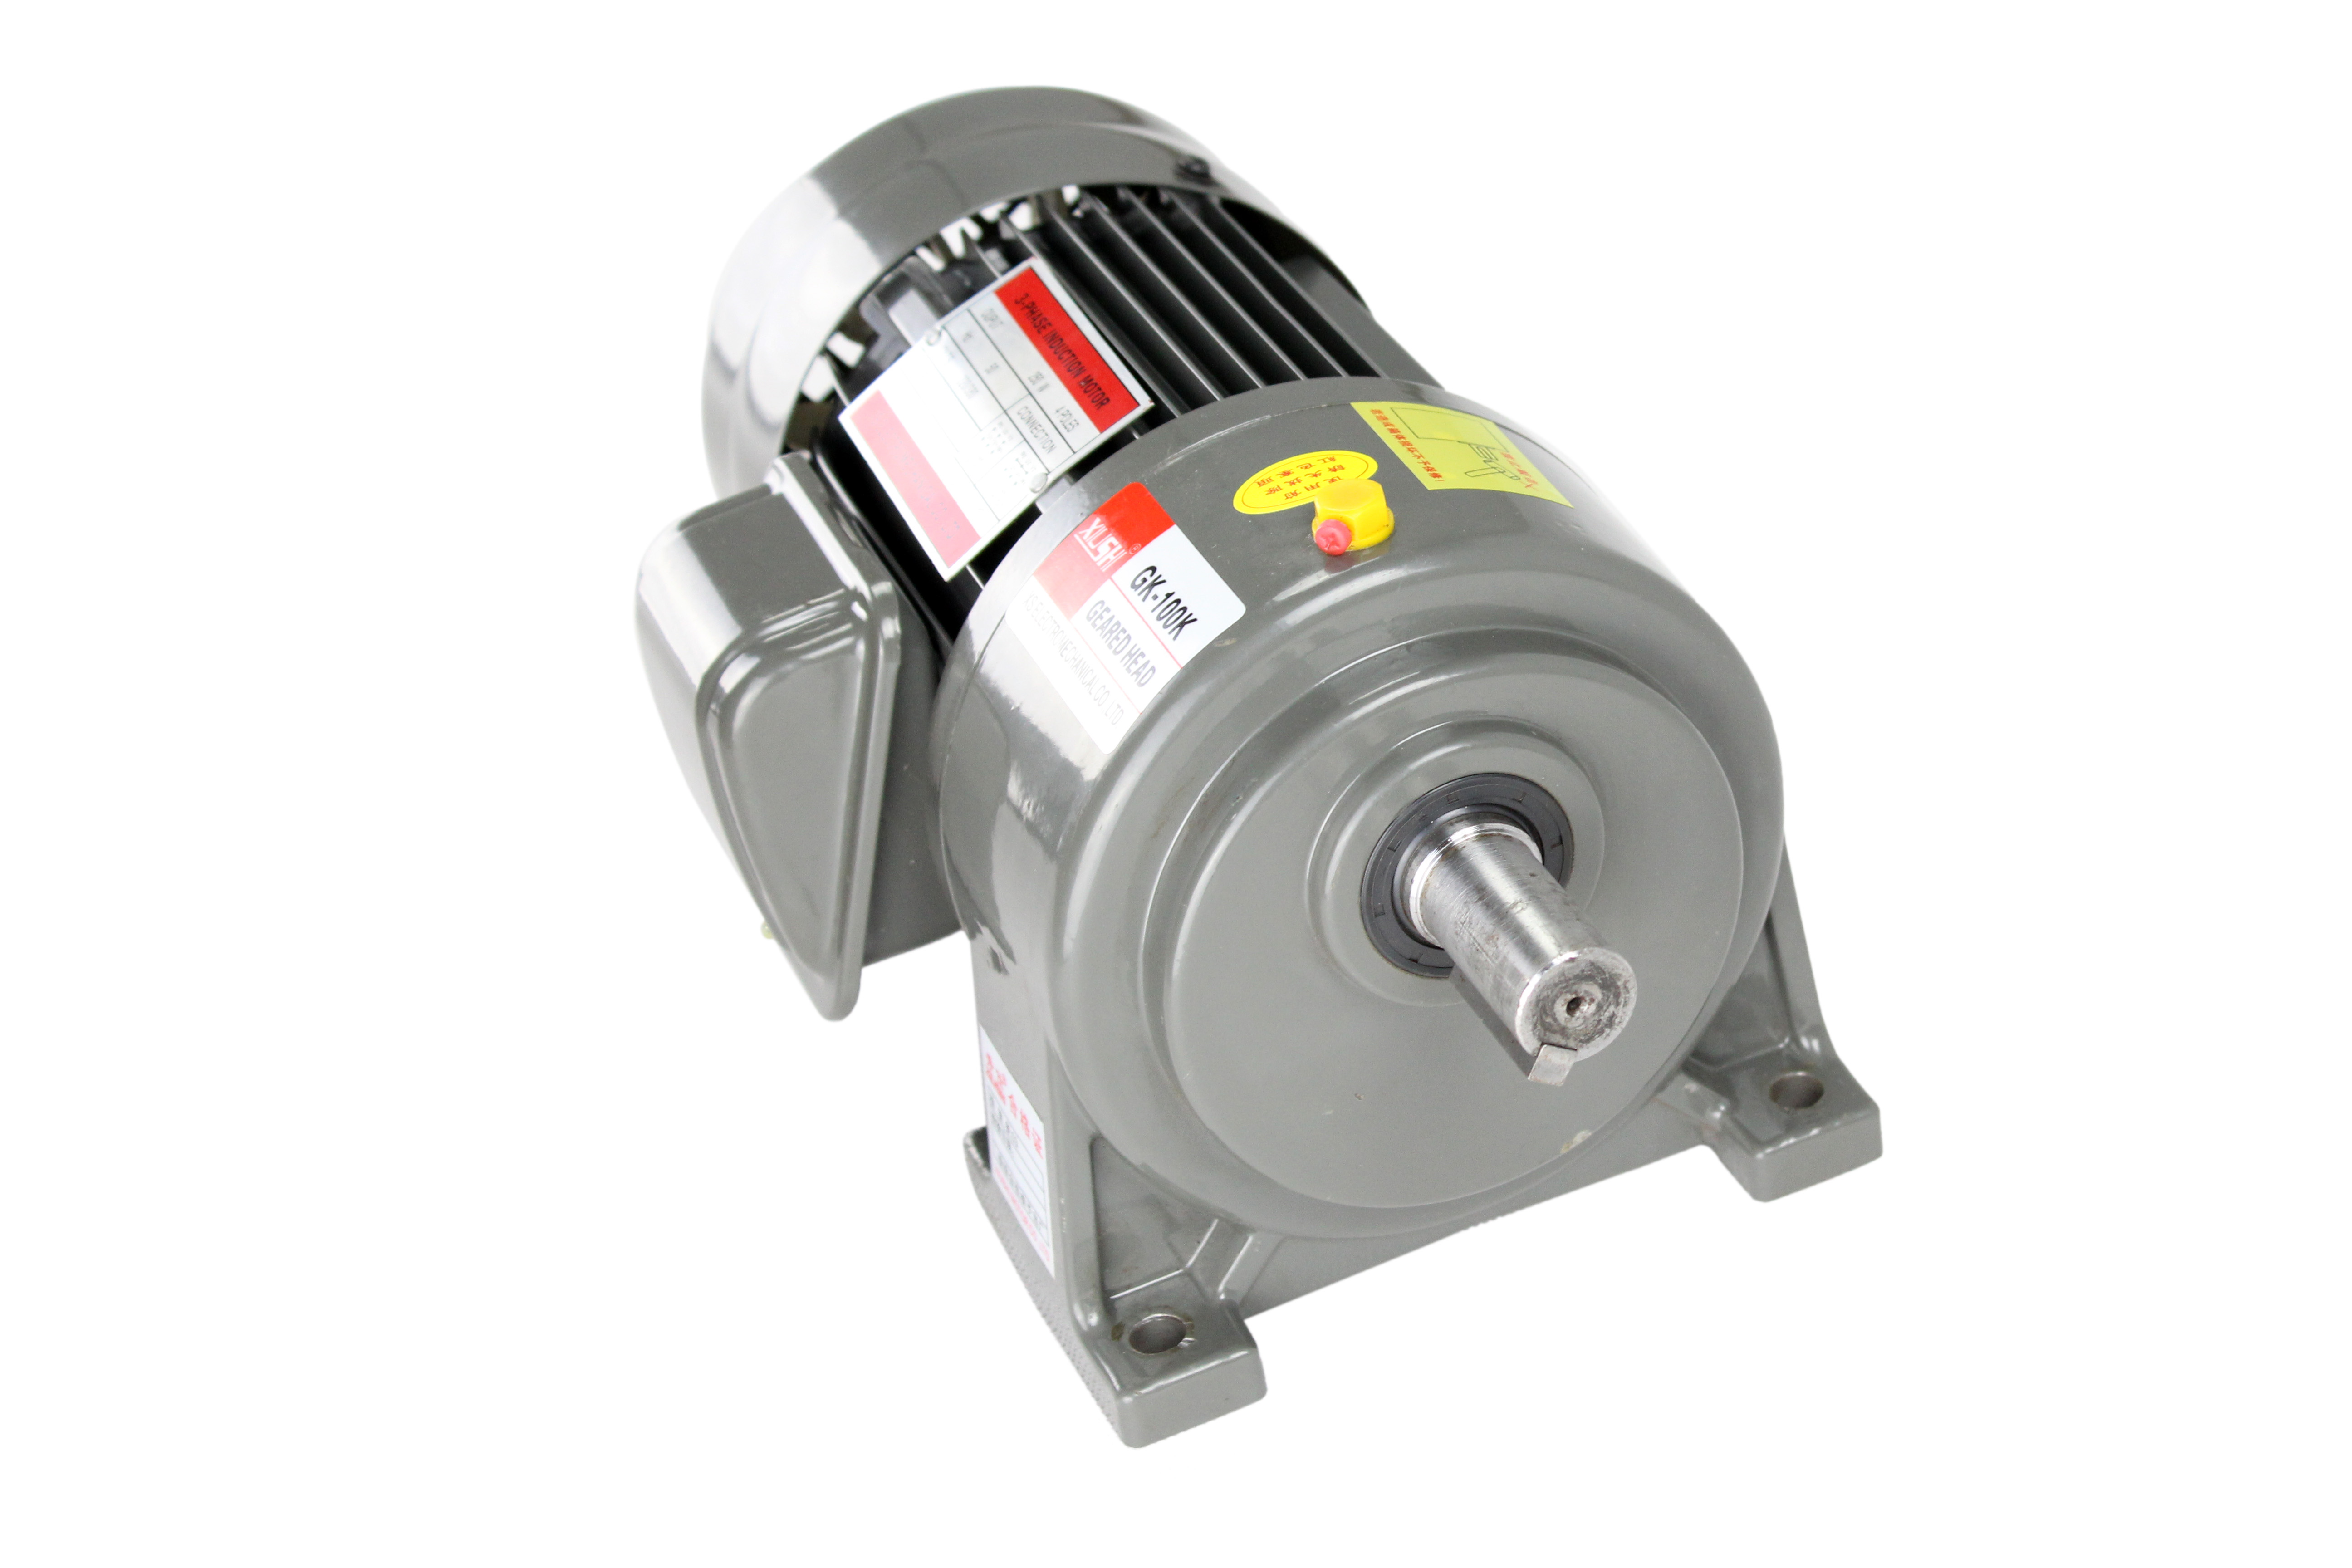 CH CV AC motor for Melt-blown machine